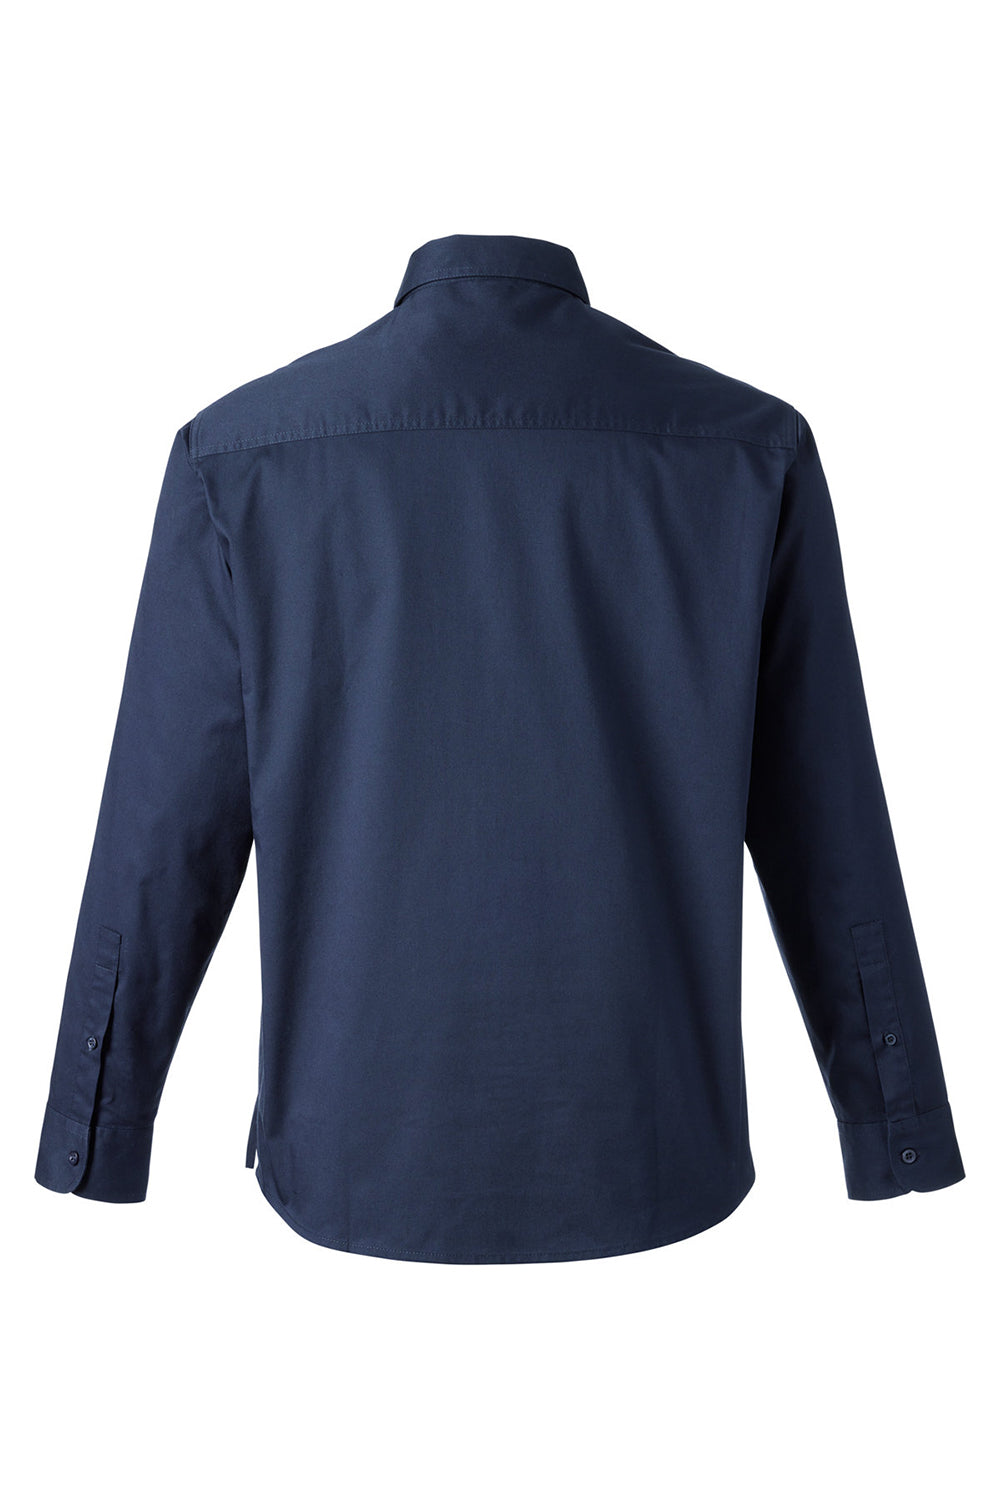 Harriton M585L Mens Advantage Long Sleeve Button Down Shirt w/ Double Pockets Dark Navy Blue Flat Back